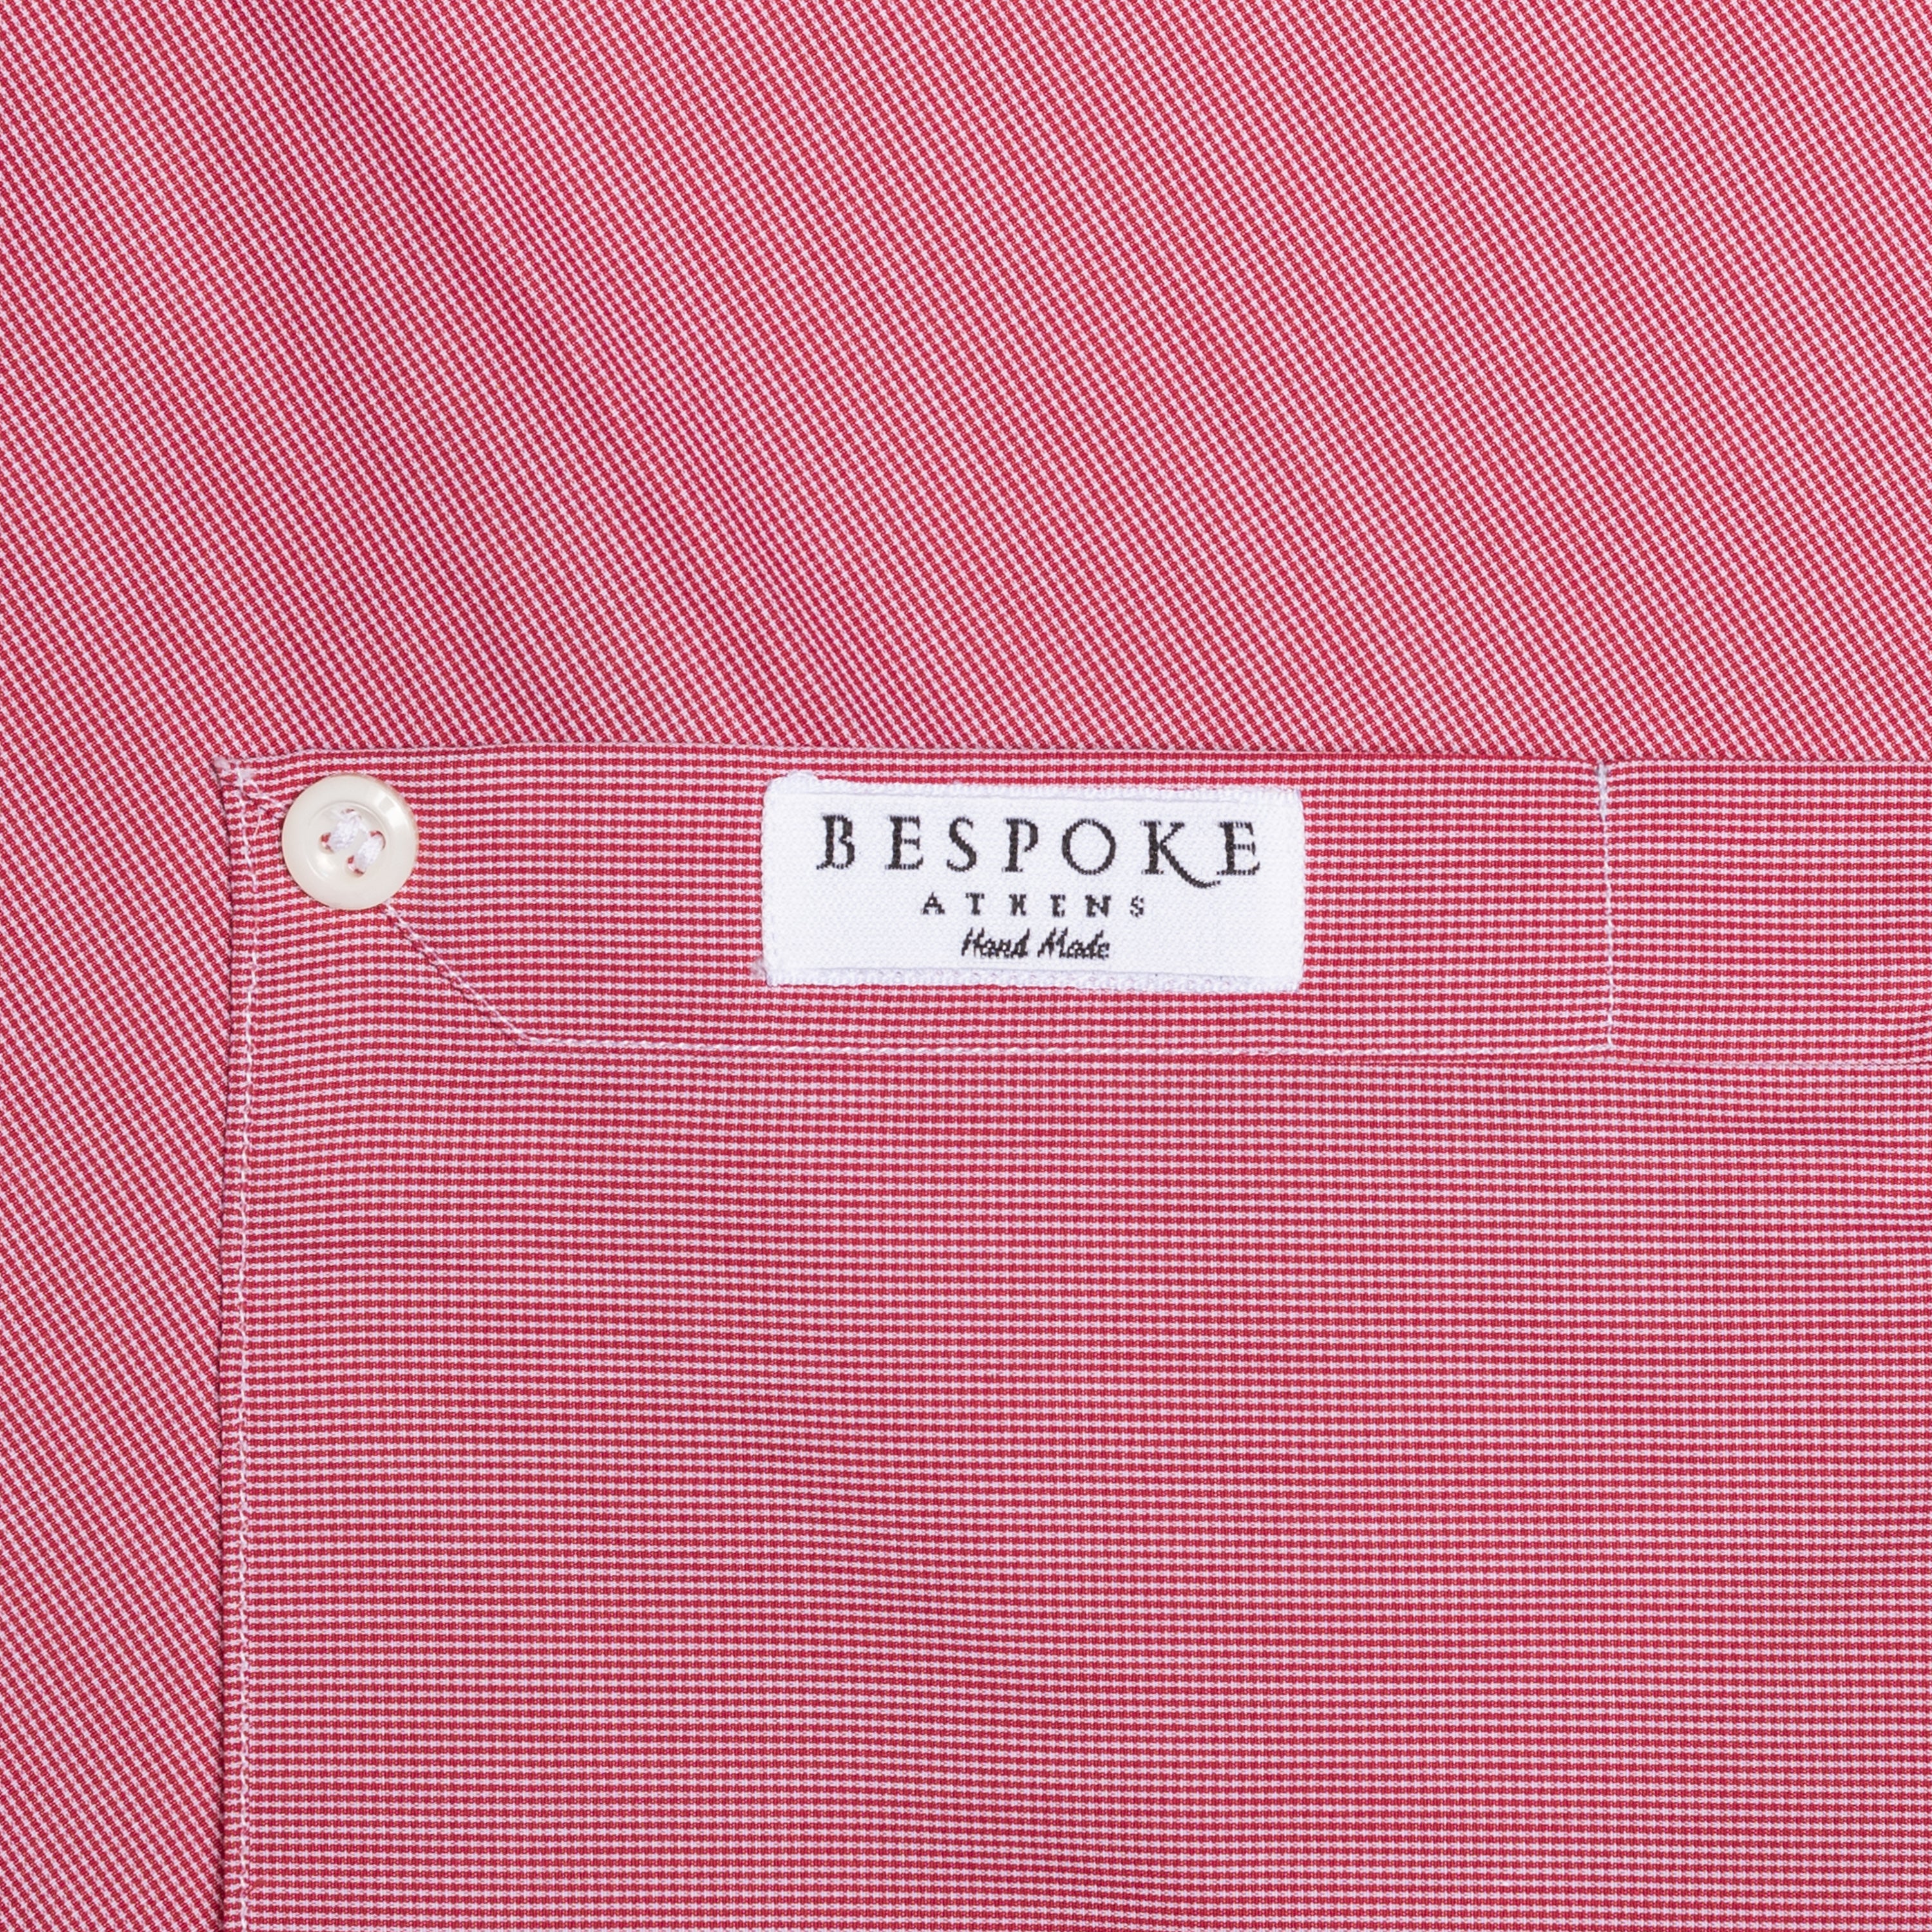 BESPOKE ATHENS Handmade Red Patterned Cotton Dress Shirt EU 41 NEW US 16 BESPOKE ATHENS